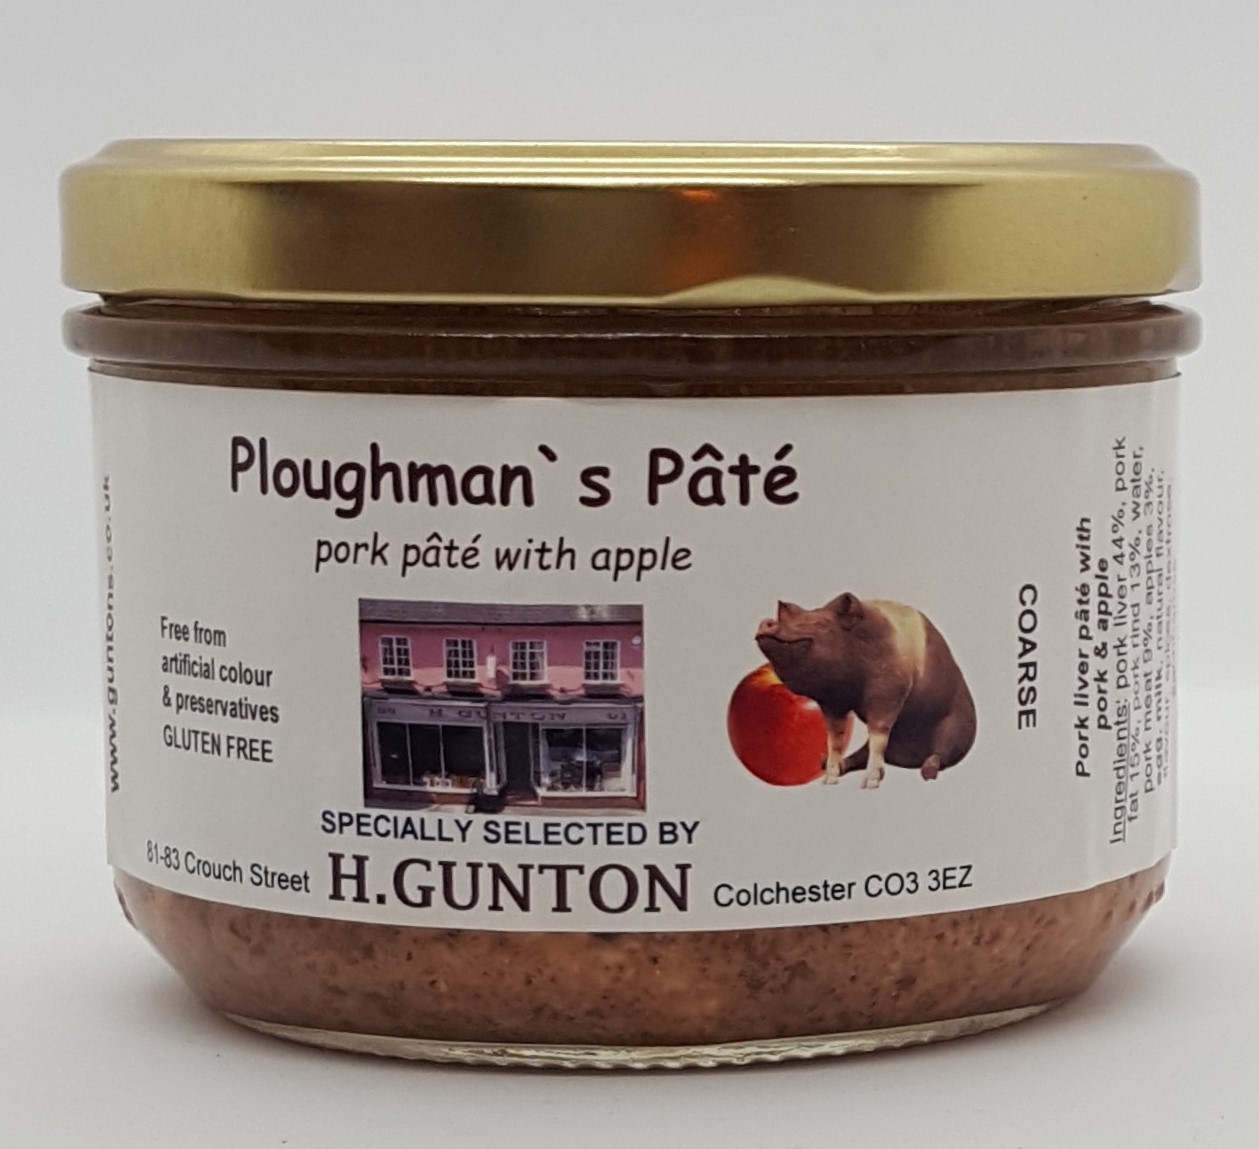 Ploughman's Pork Pate